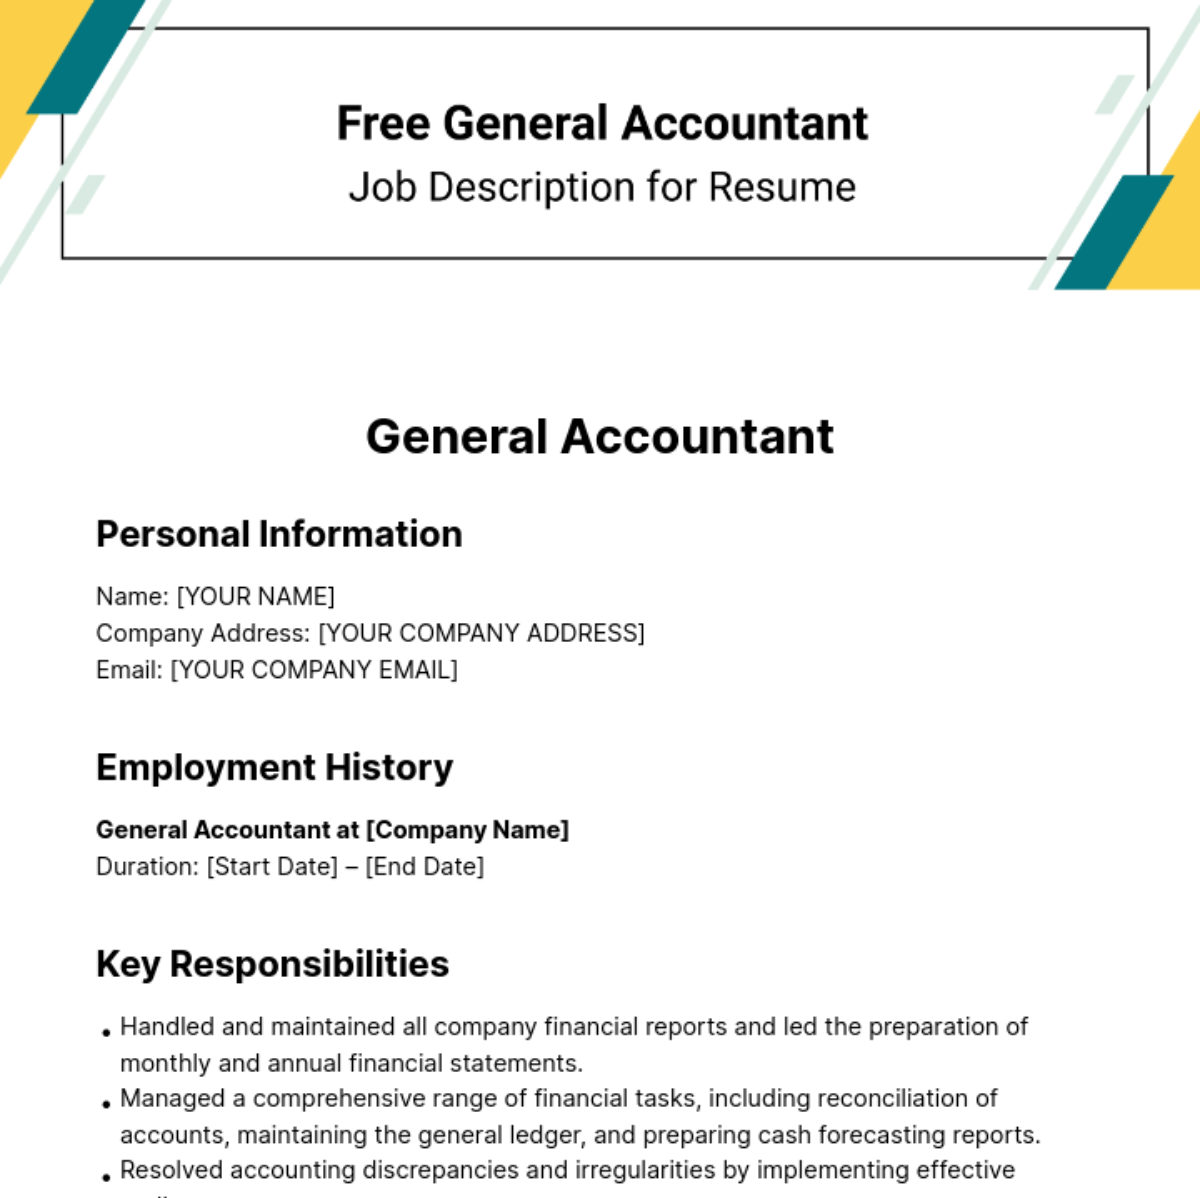 General Accountant Job Description for Resume Template